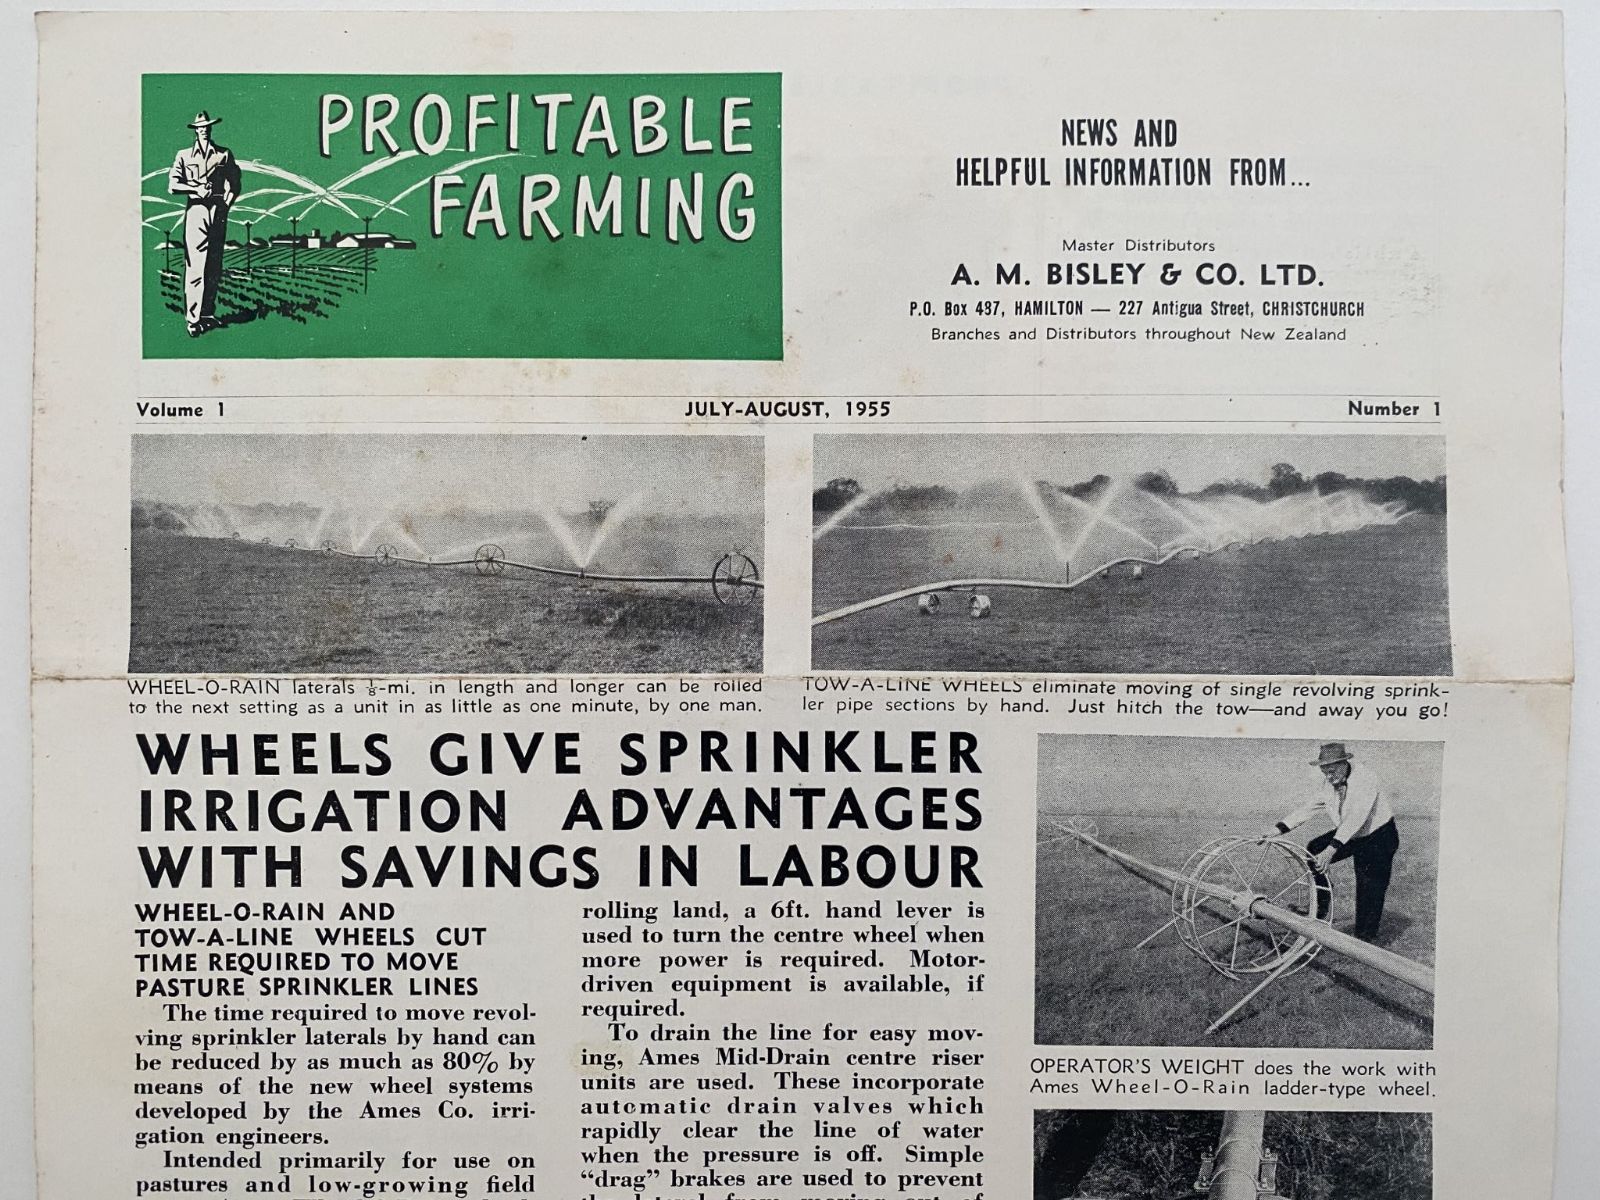 FARMING BULLETIN: Profitable Farming - A M Bisley & Co. 1955